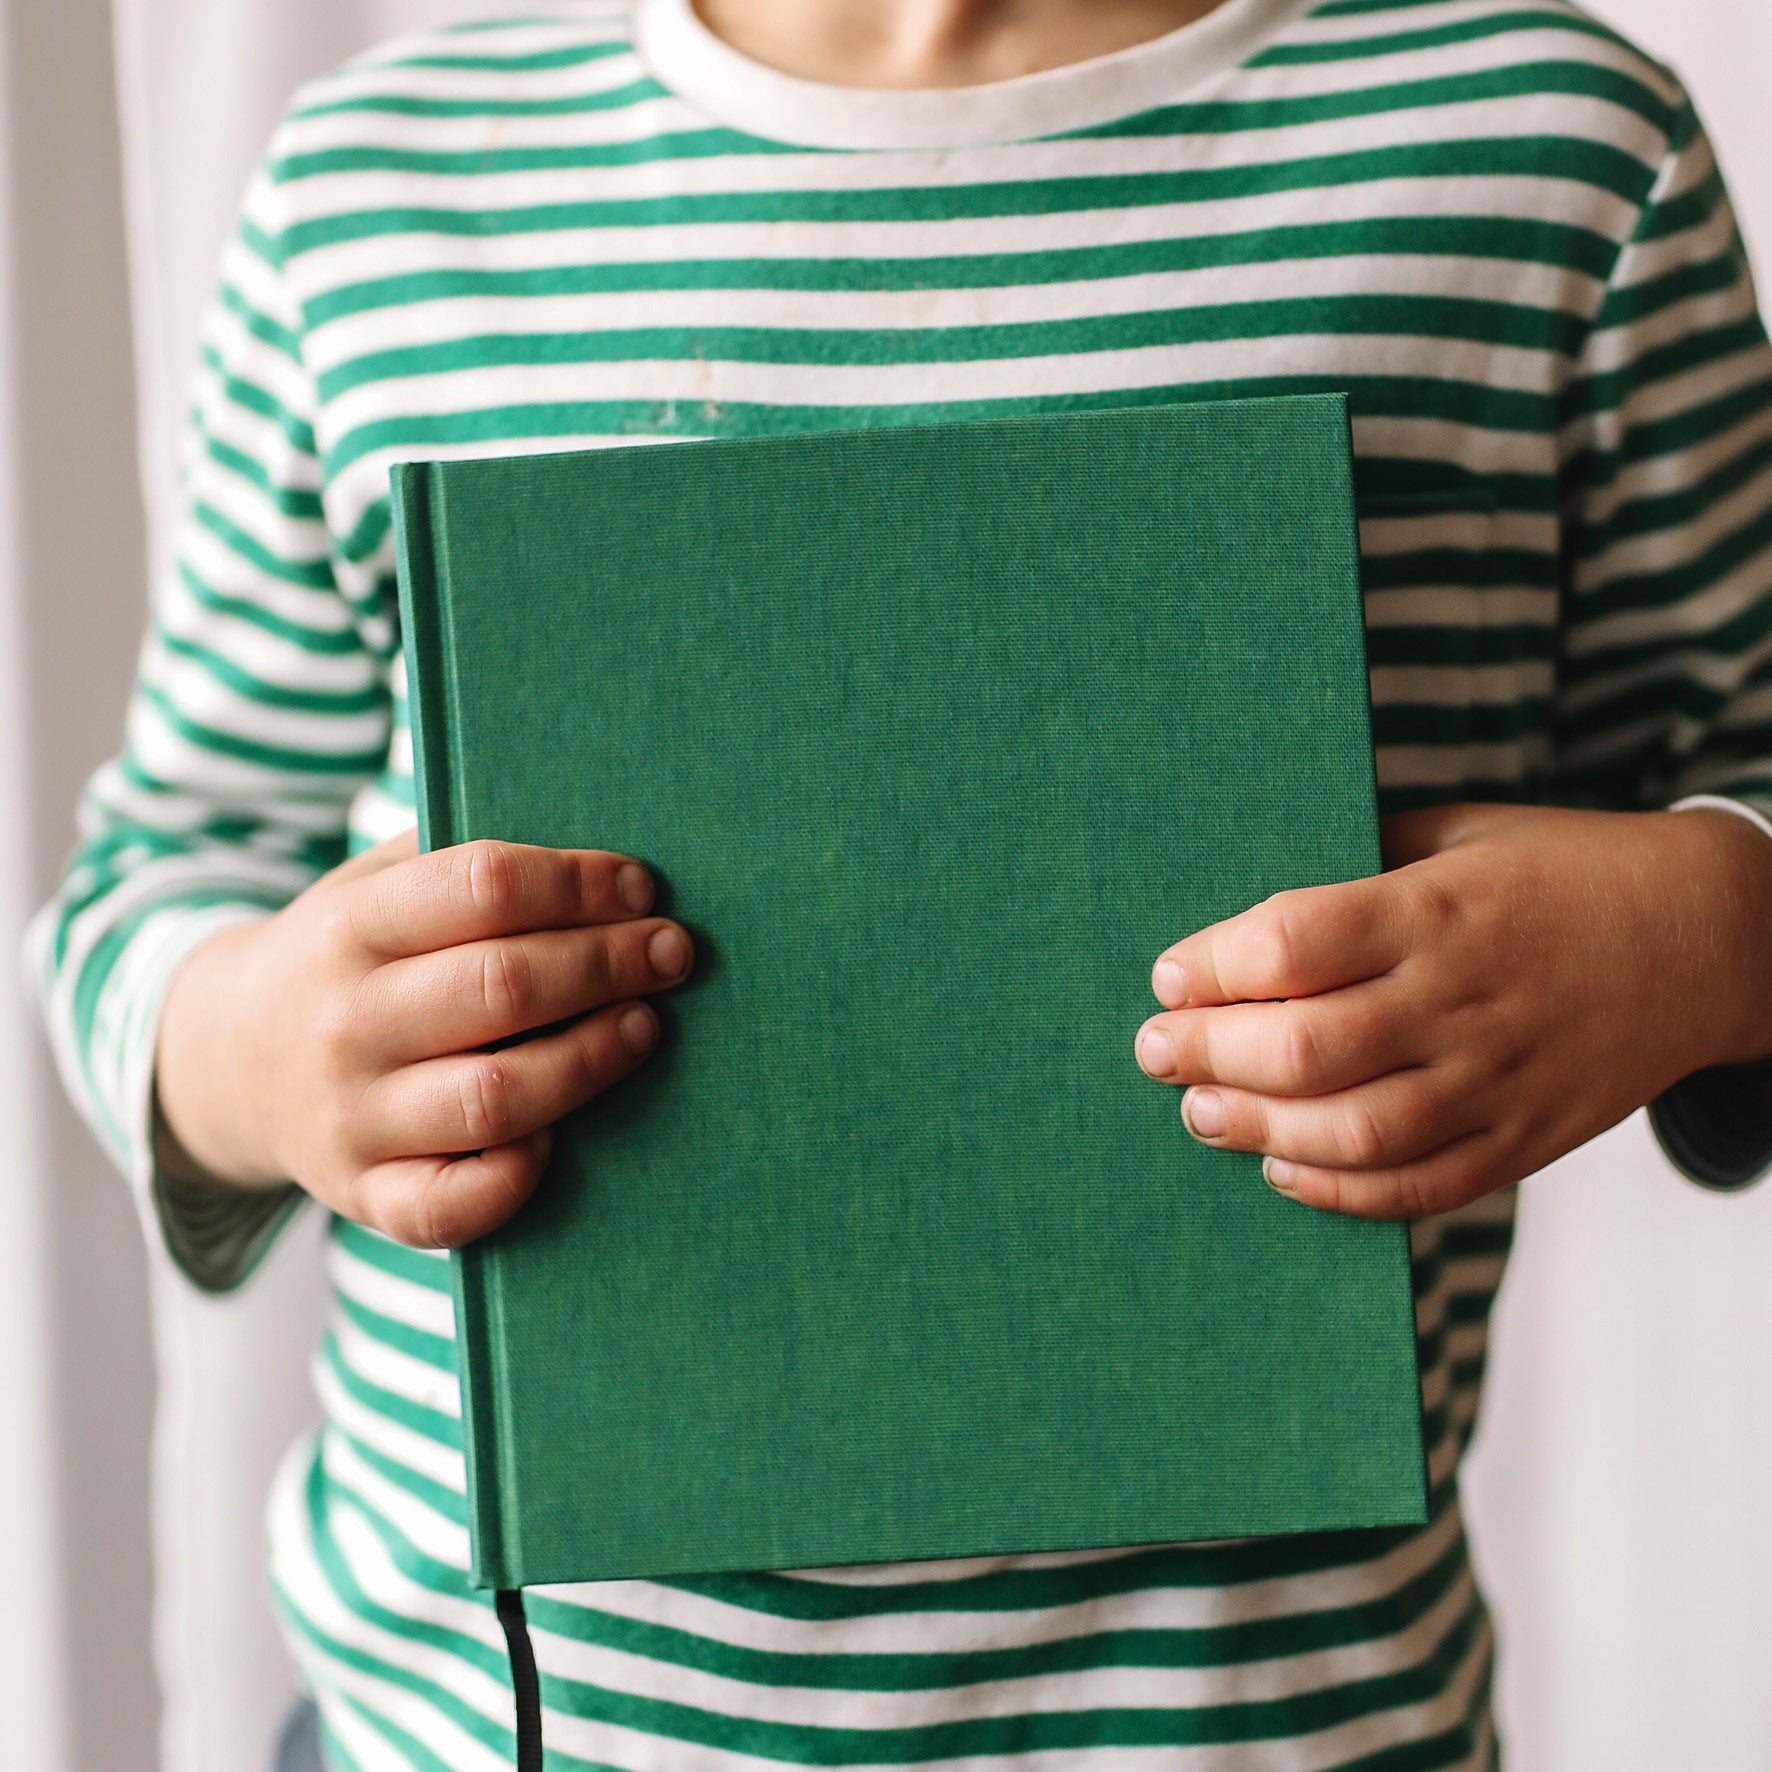 Bookbinders Design - Cloth Notebook - Regular - Orange